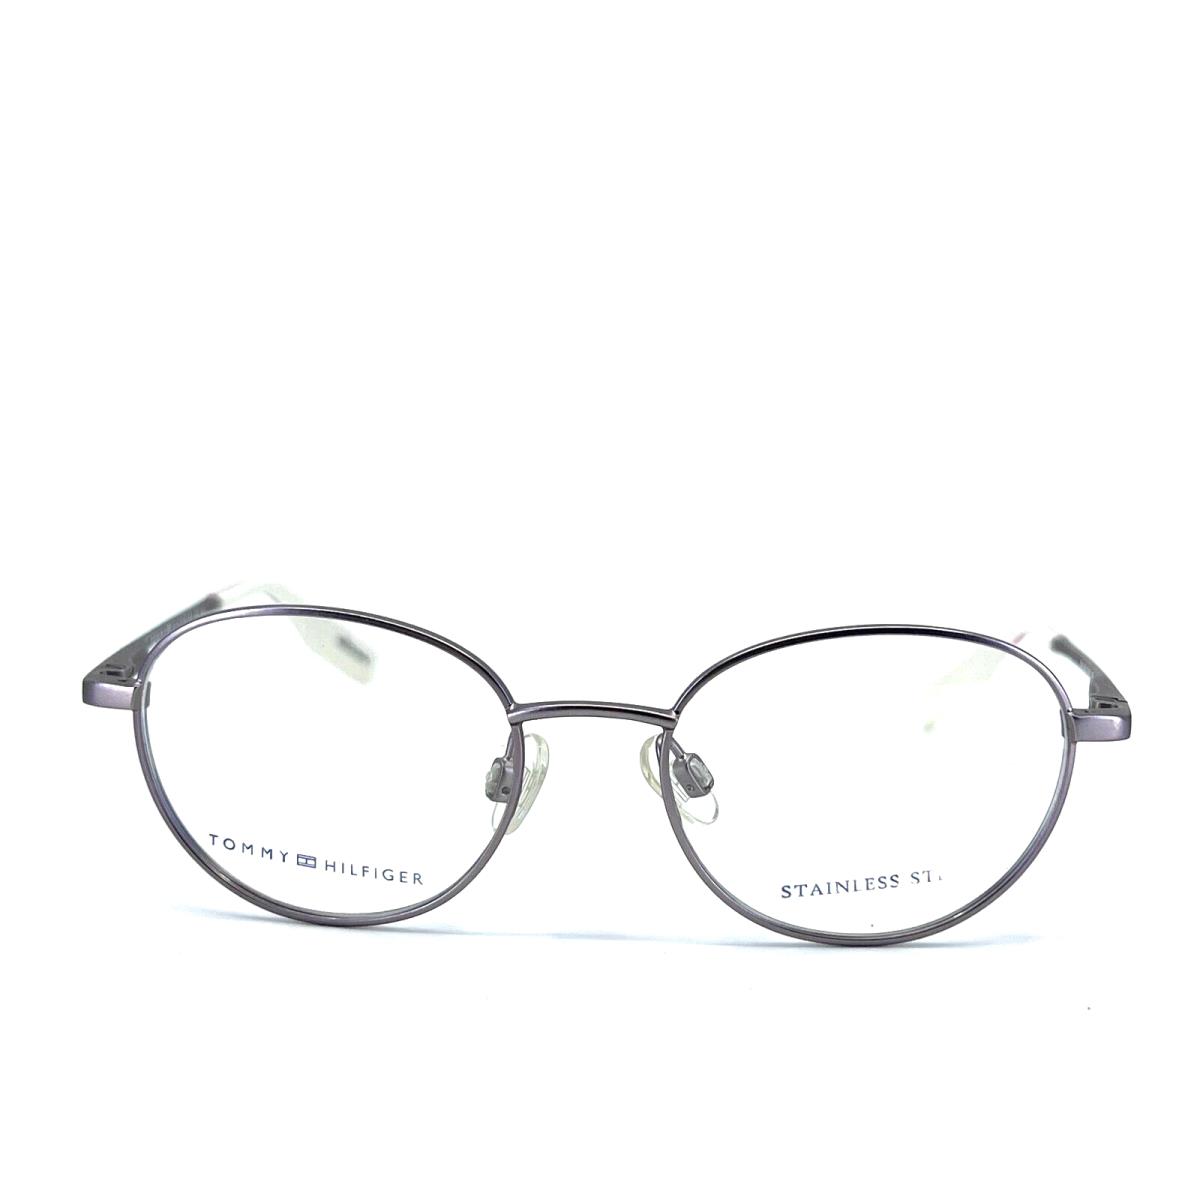 Tommy Hilfiger Eyeglasses TH 1146 Ews Round Silver Full Rim Frames 44-15-125